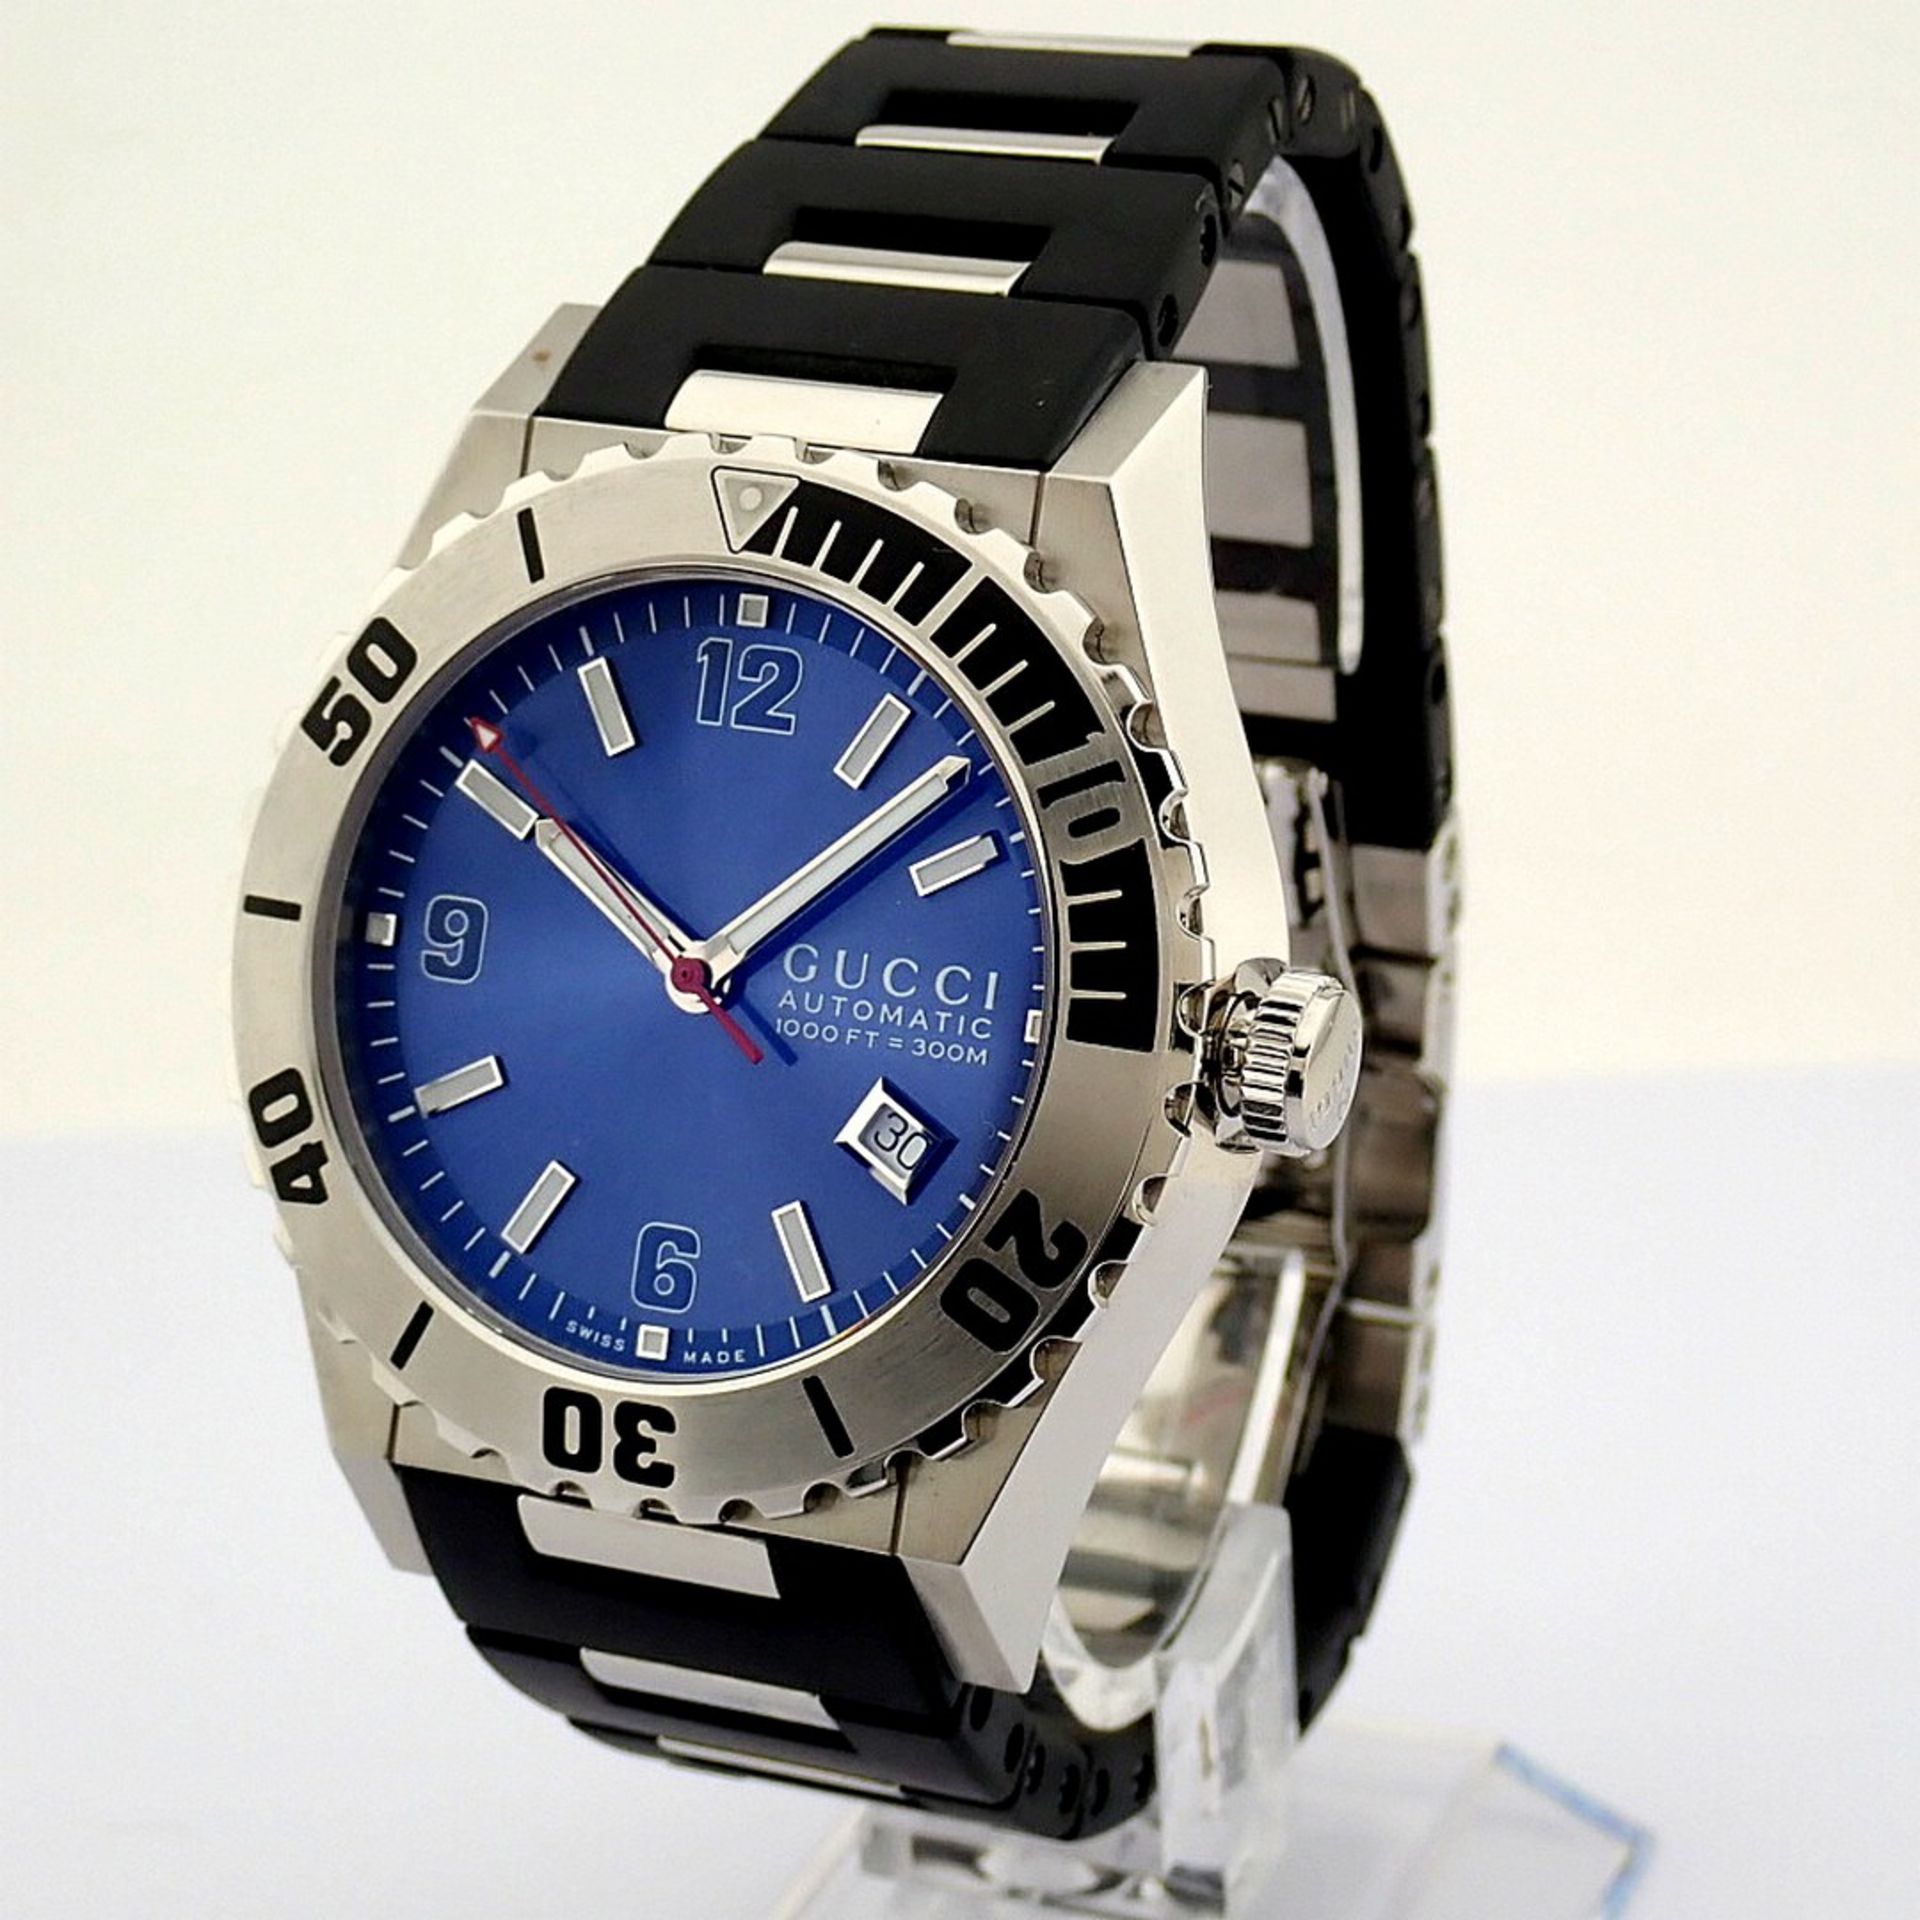 Gucci / Pantheon 115.2 (Brand New) - Gentlmen's Steel Wrist Watch - Image 7 of 13